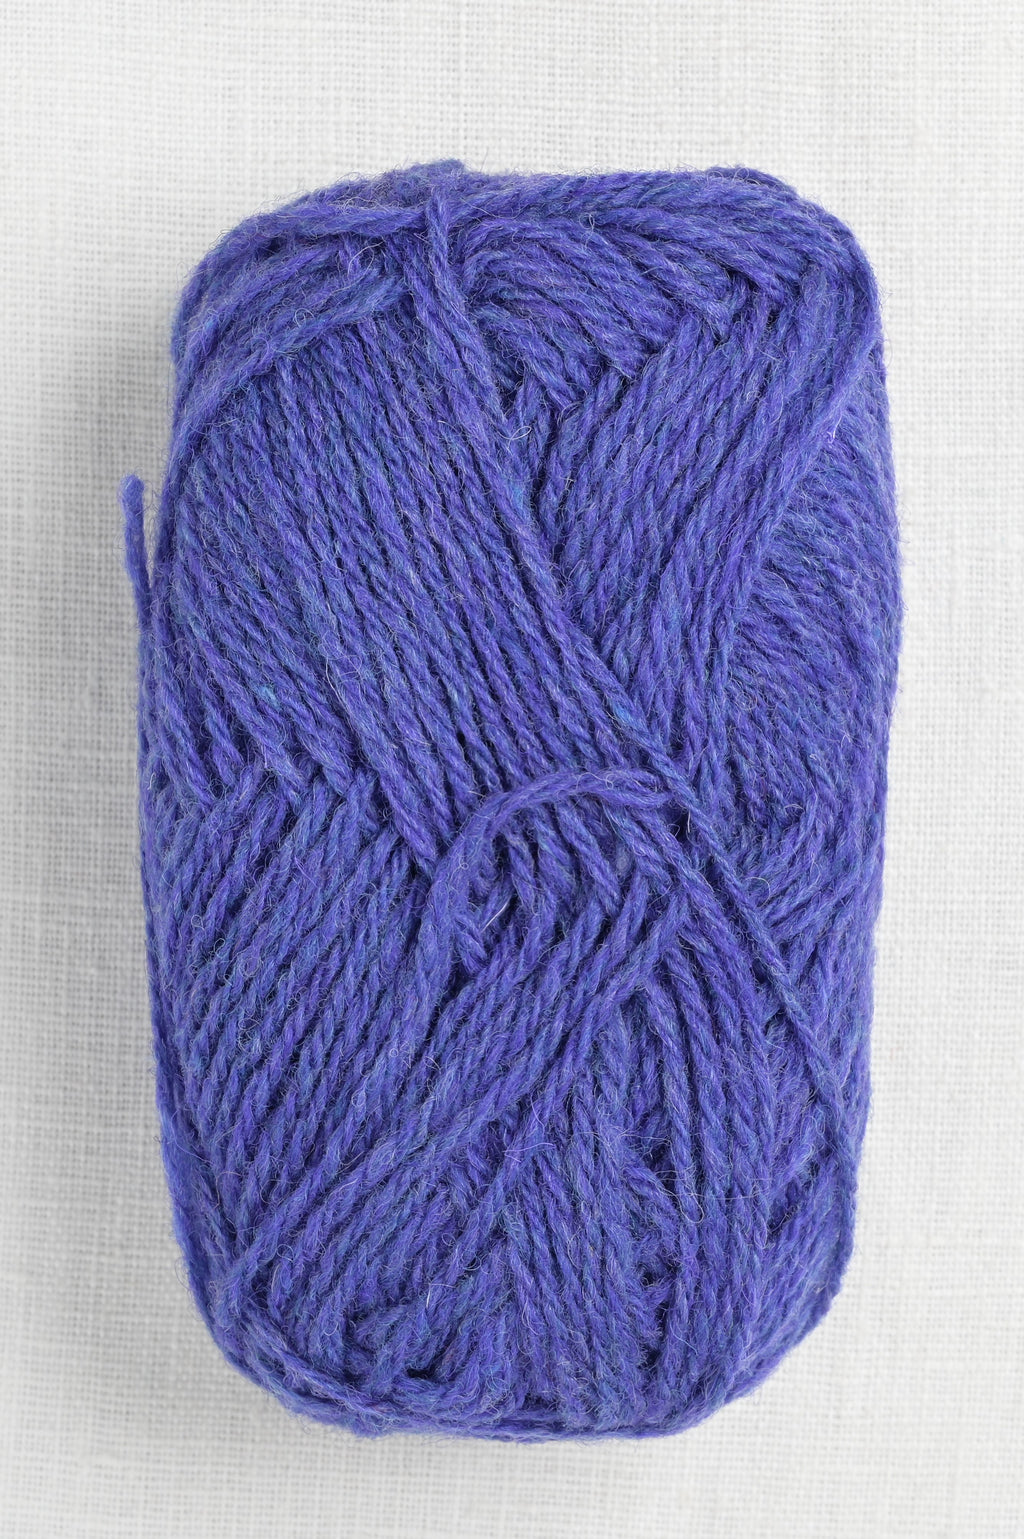 jamieson's shetland double knitting 629 lupin